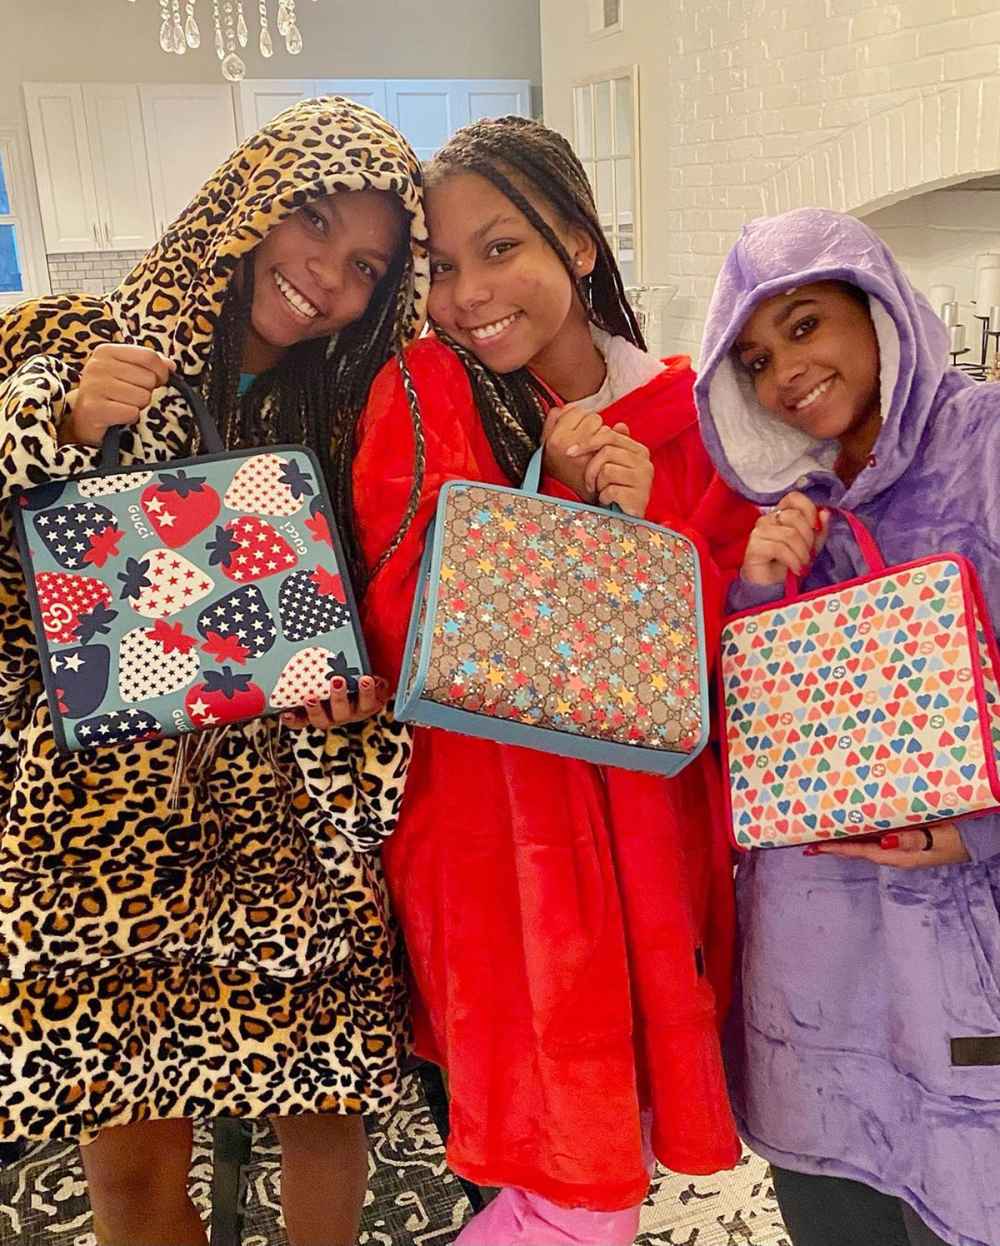 Nicki Minaj Surprises RHOP Star Gizelle Bryant Daughters With Gucci Bags